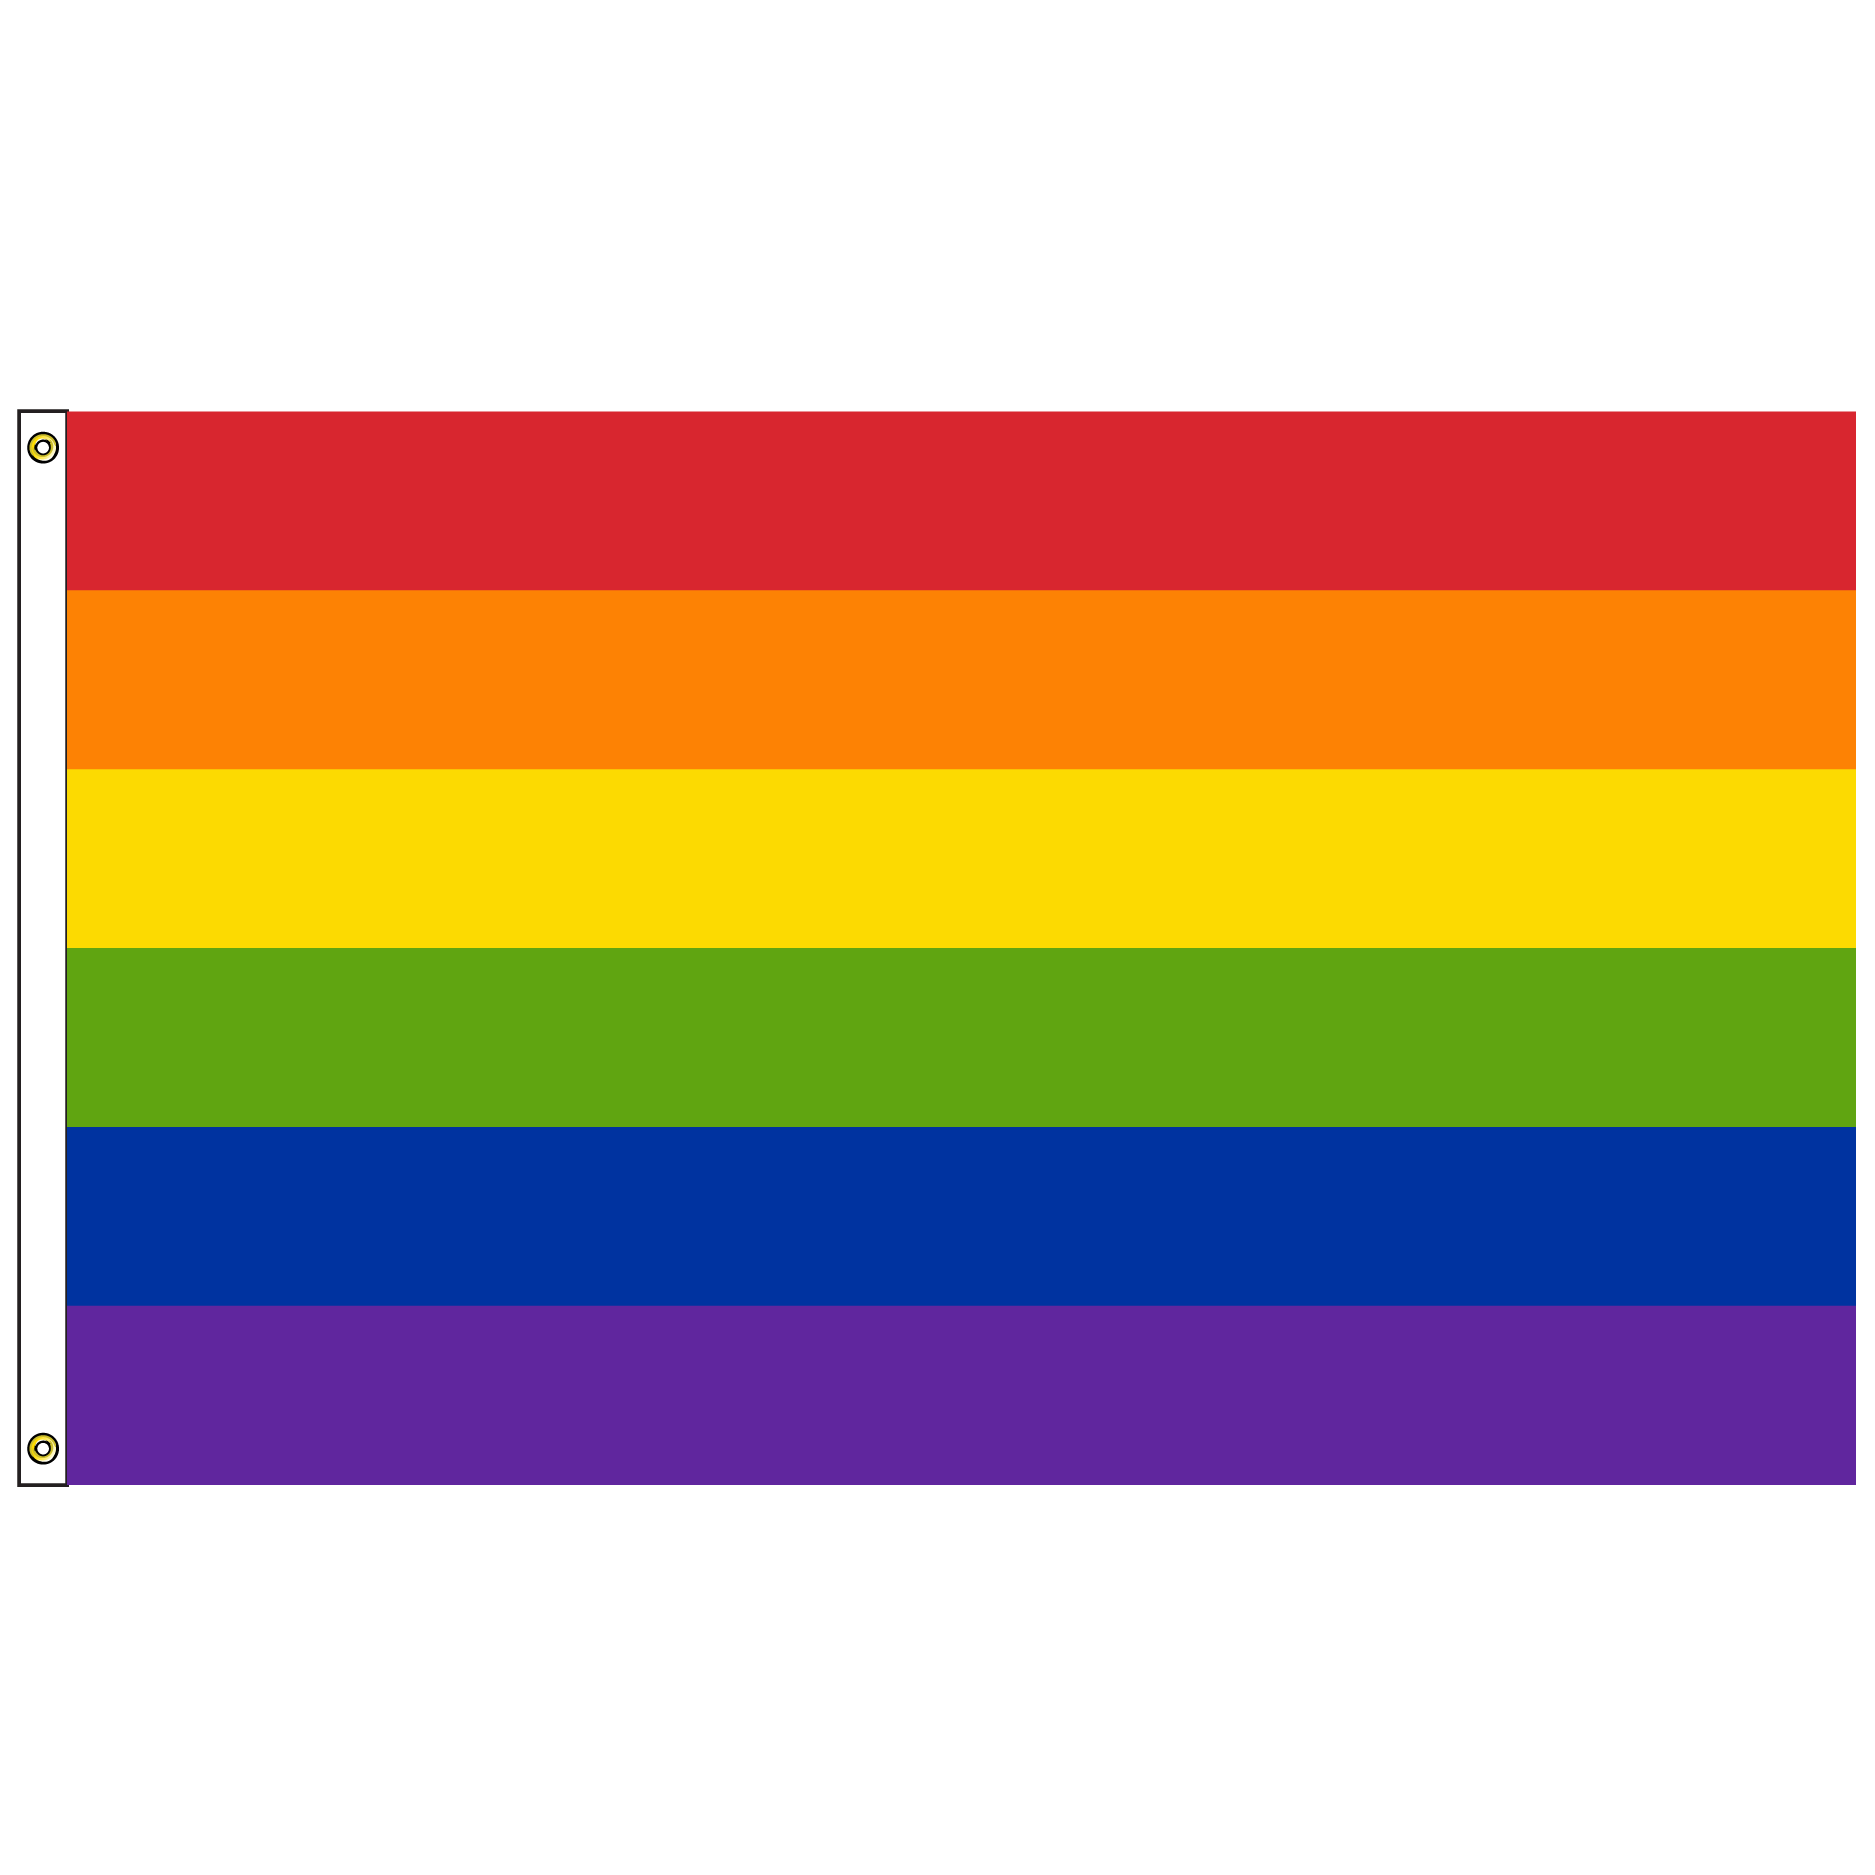 LGBTQ+ Rainbow Flags